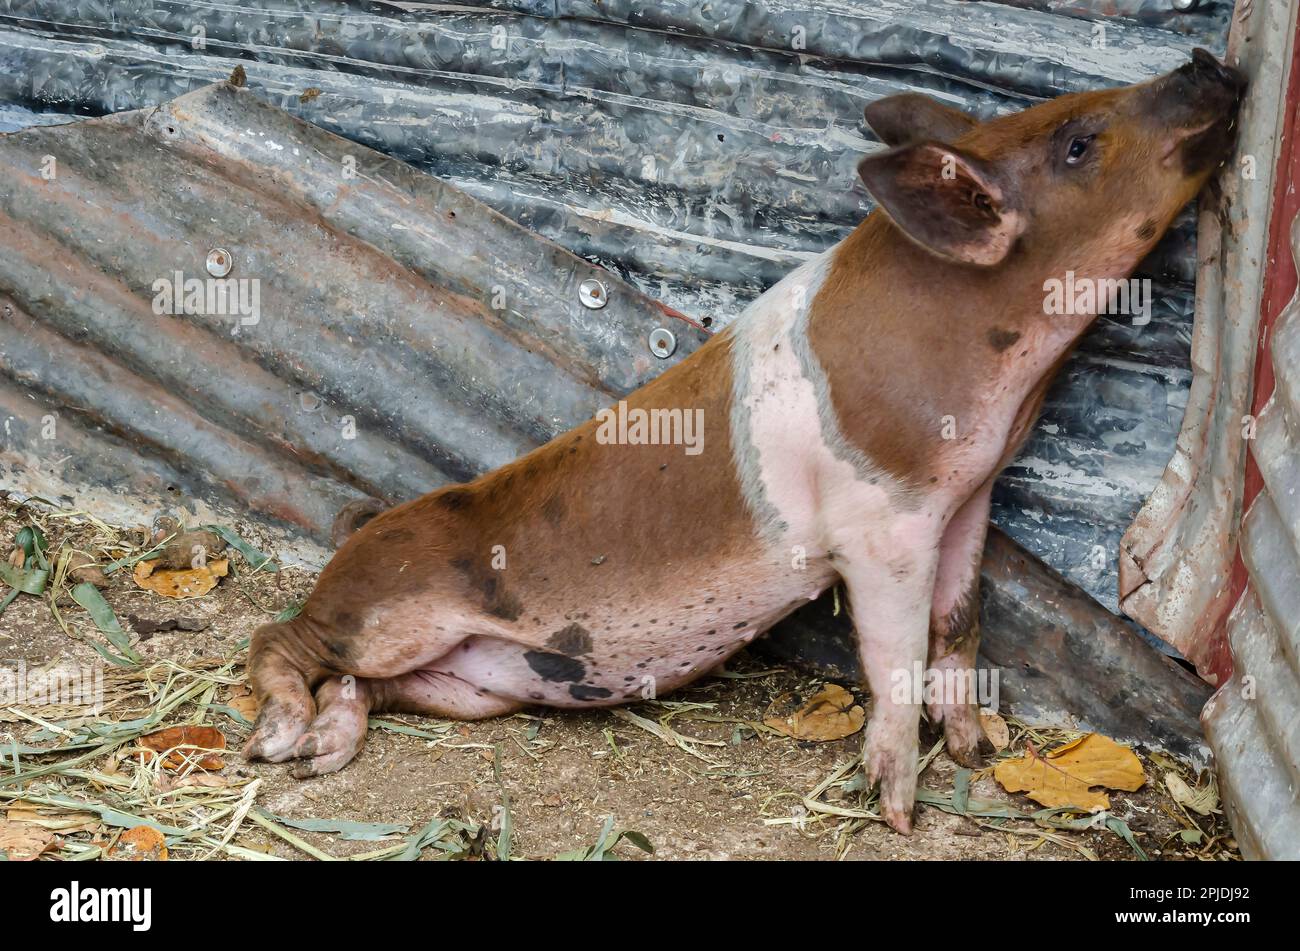 Pig In Pen Stock Photo